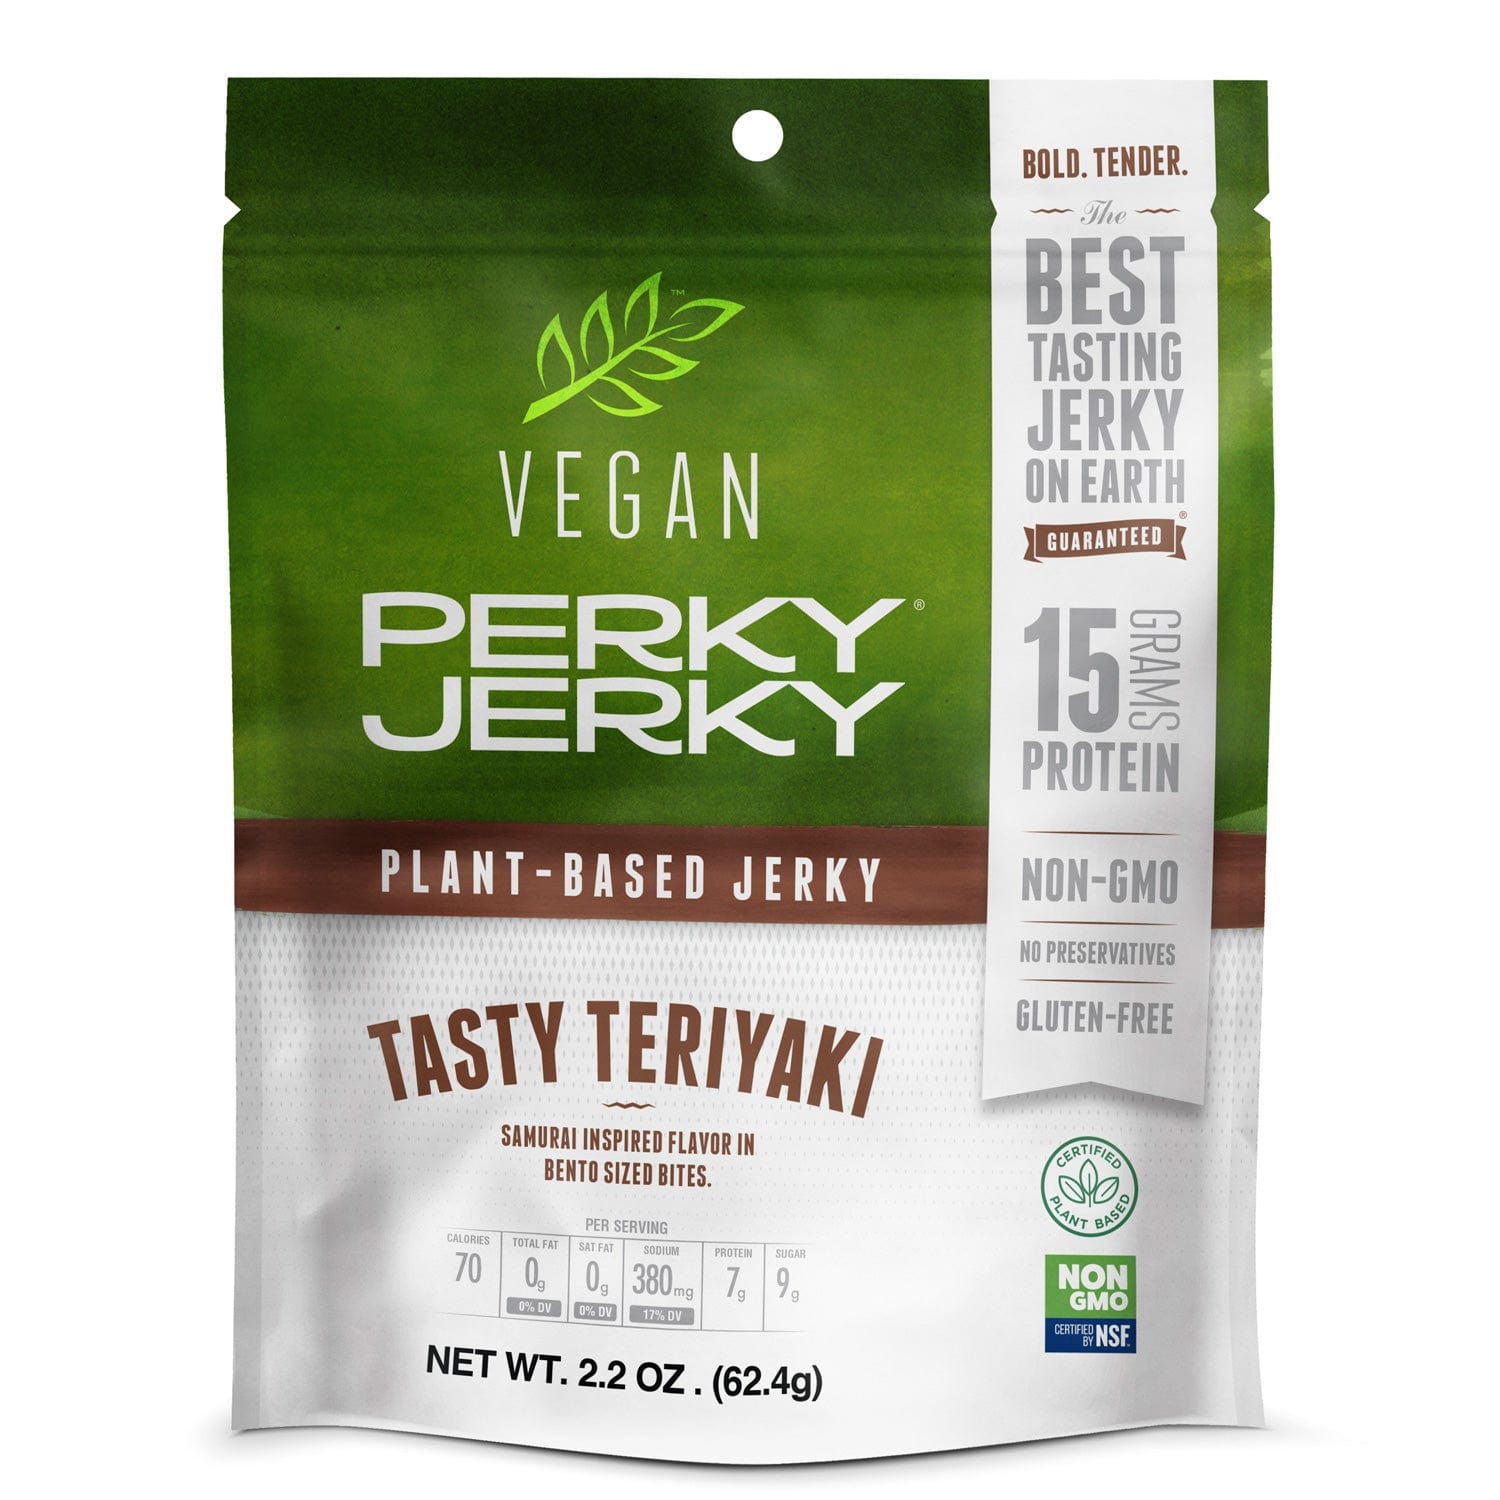 Perky Jerky Tasty Teriyaki Vegan Jerky 2.2 oz bag